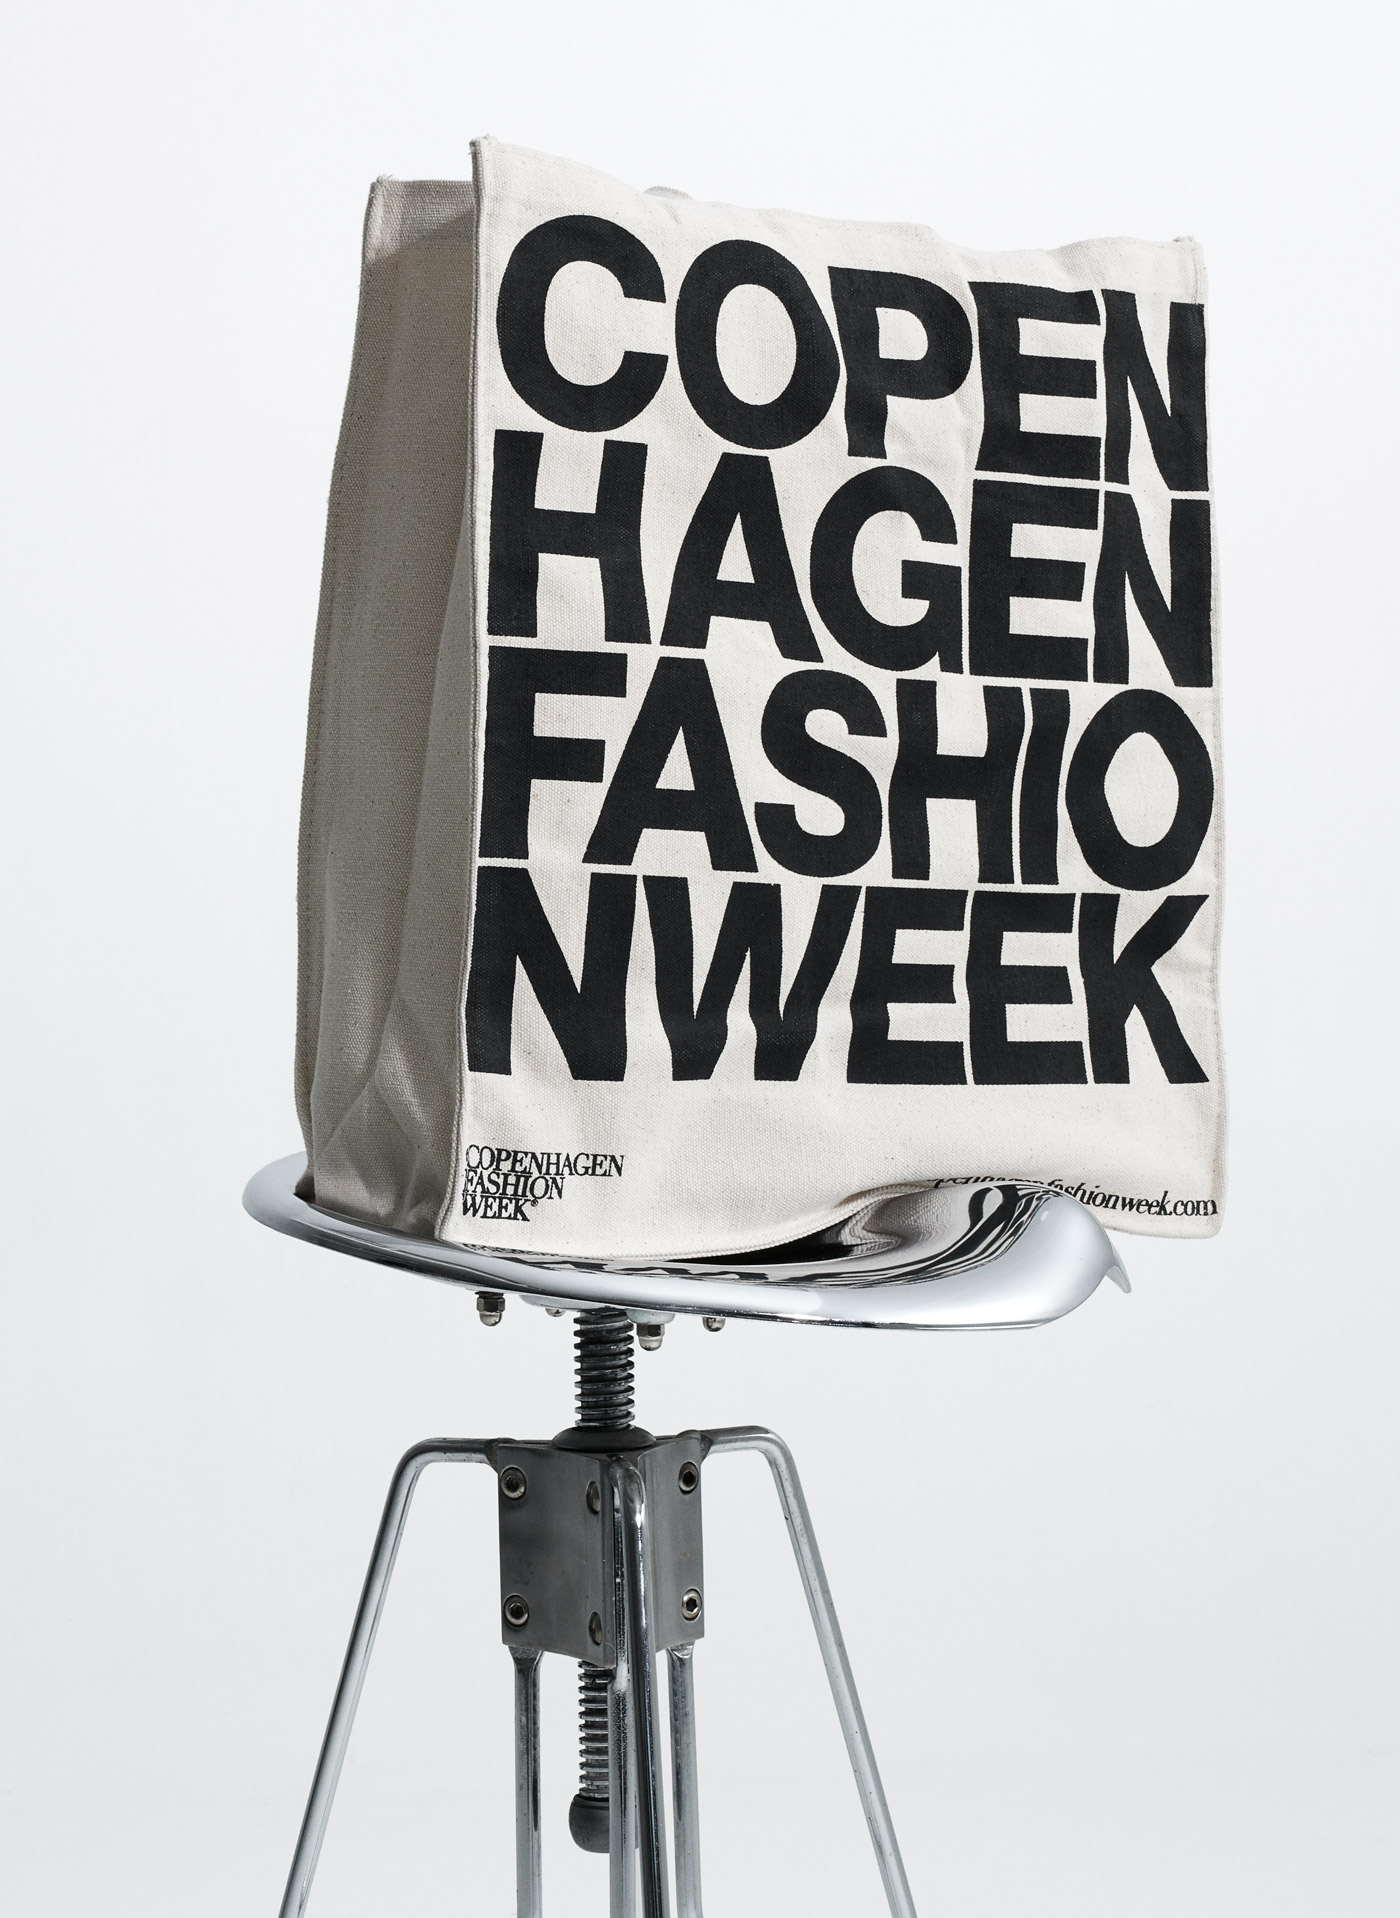 Copenhagen Fashion Week – Tote bag